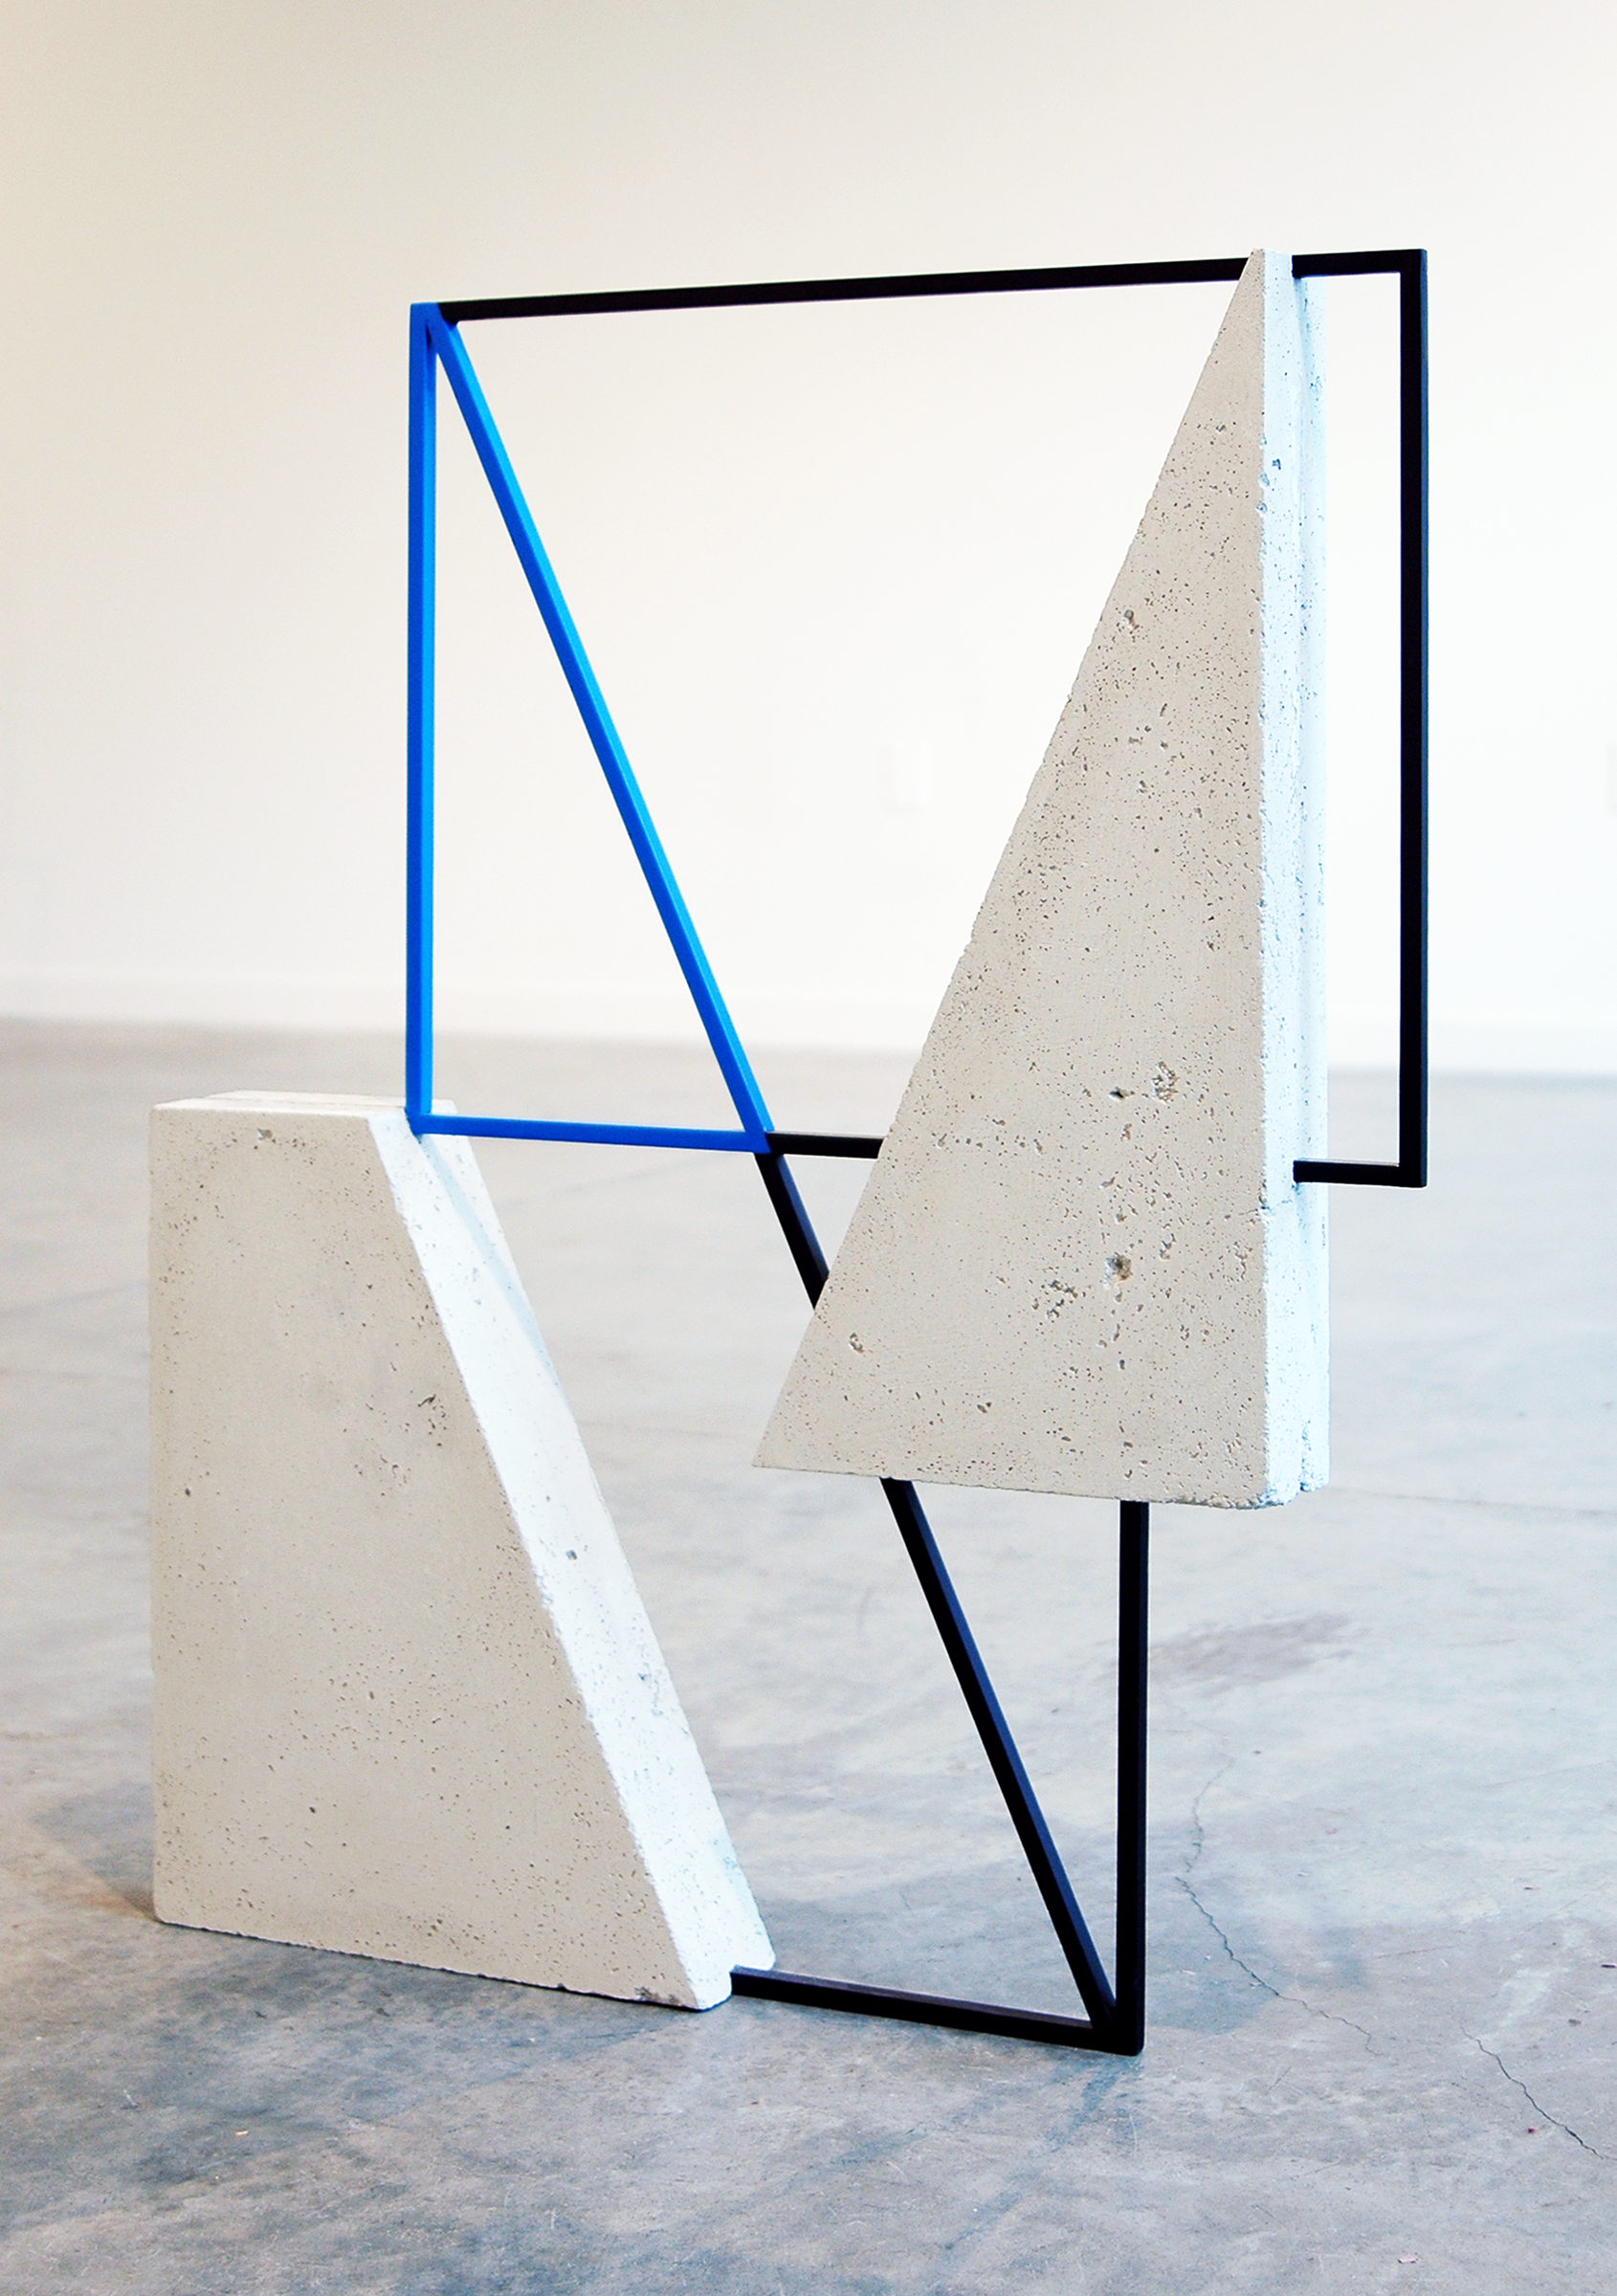   JONATHAN RUNCIO   Untitled , concrete, steel, primer and enamel, 31.5" x 25" x 2.5", 2013 